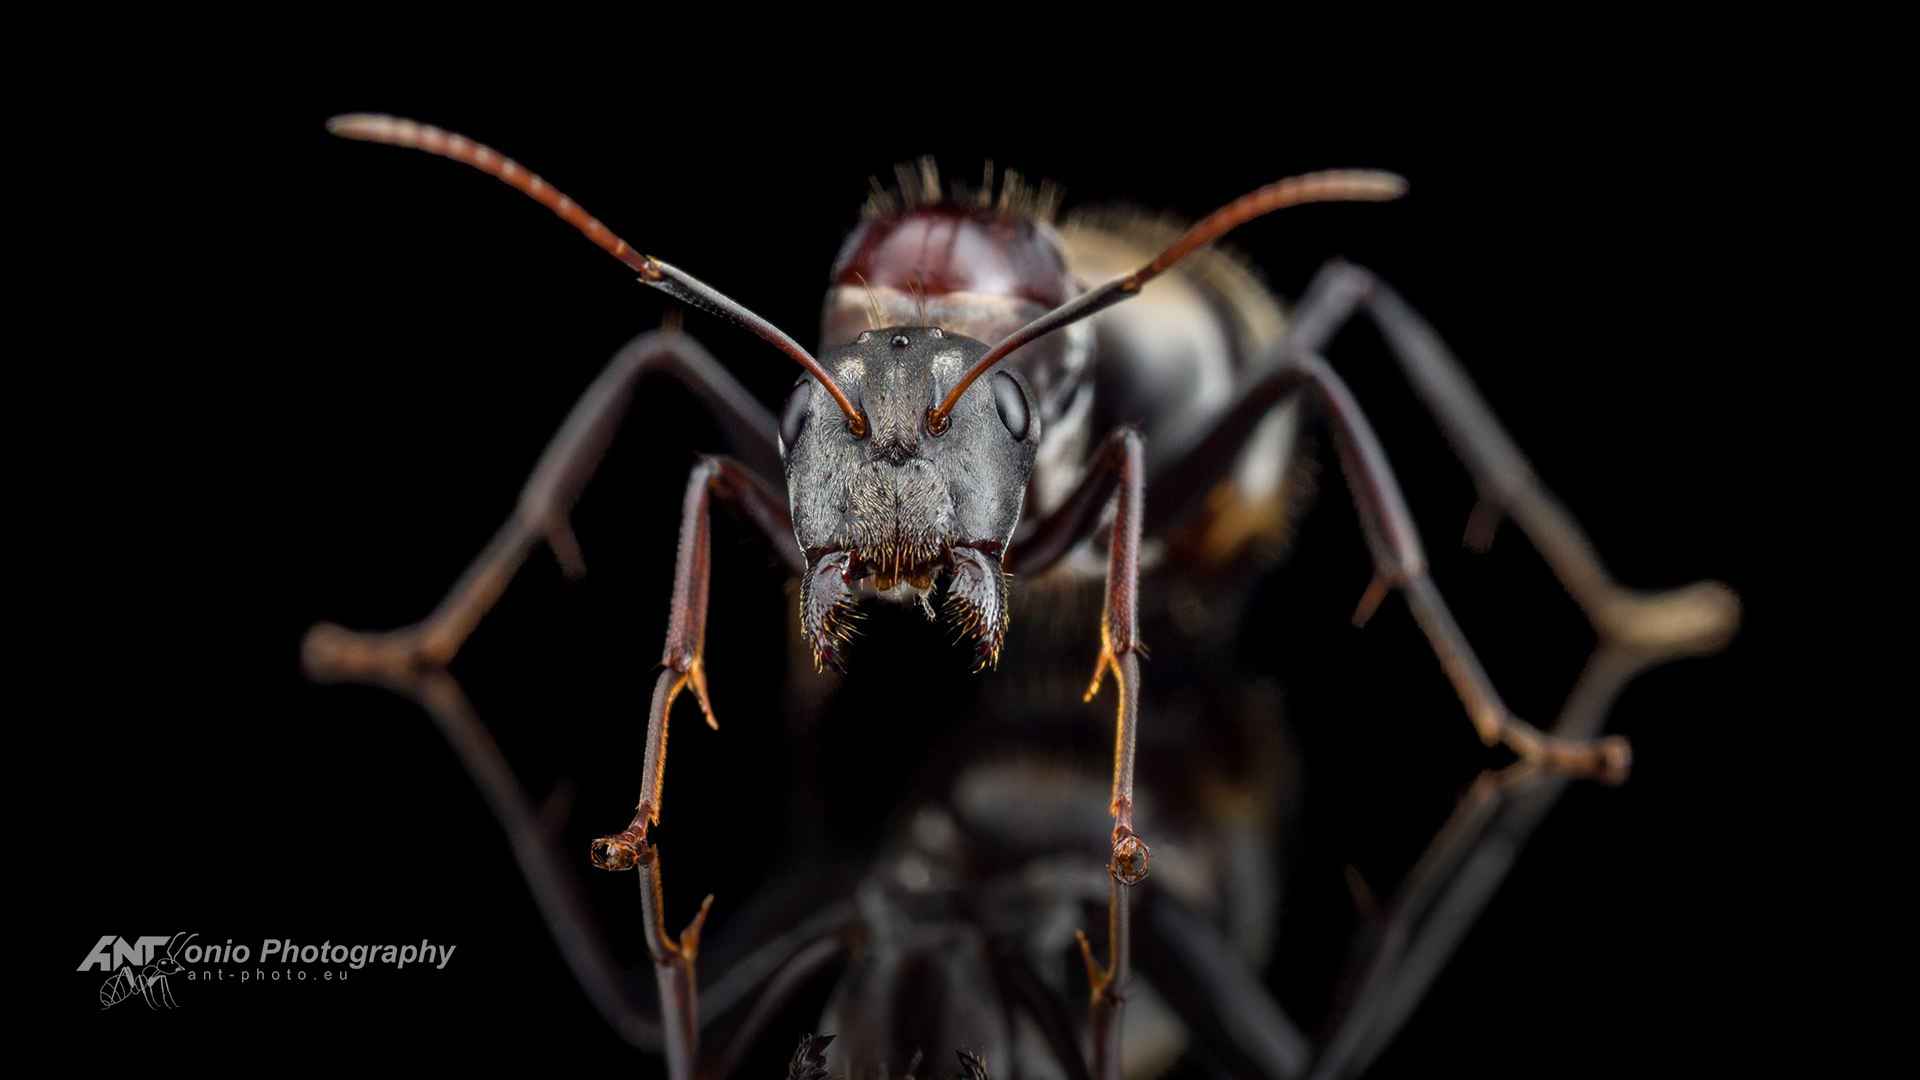 Camponotus cosmicus